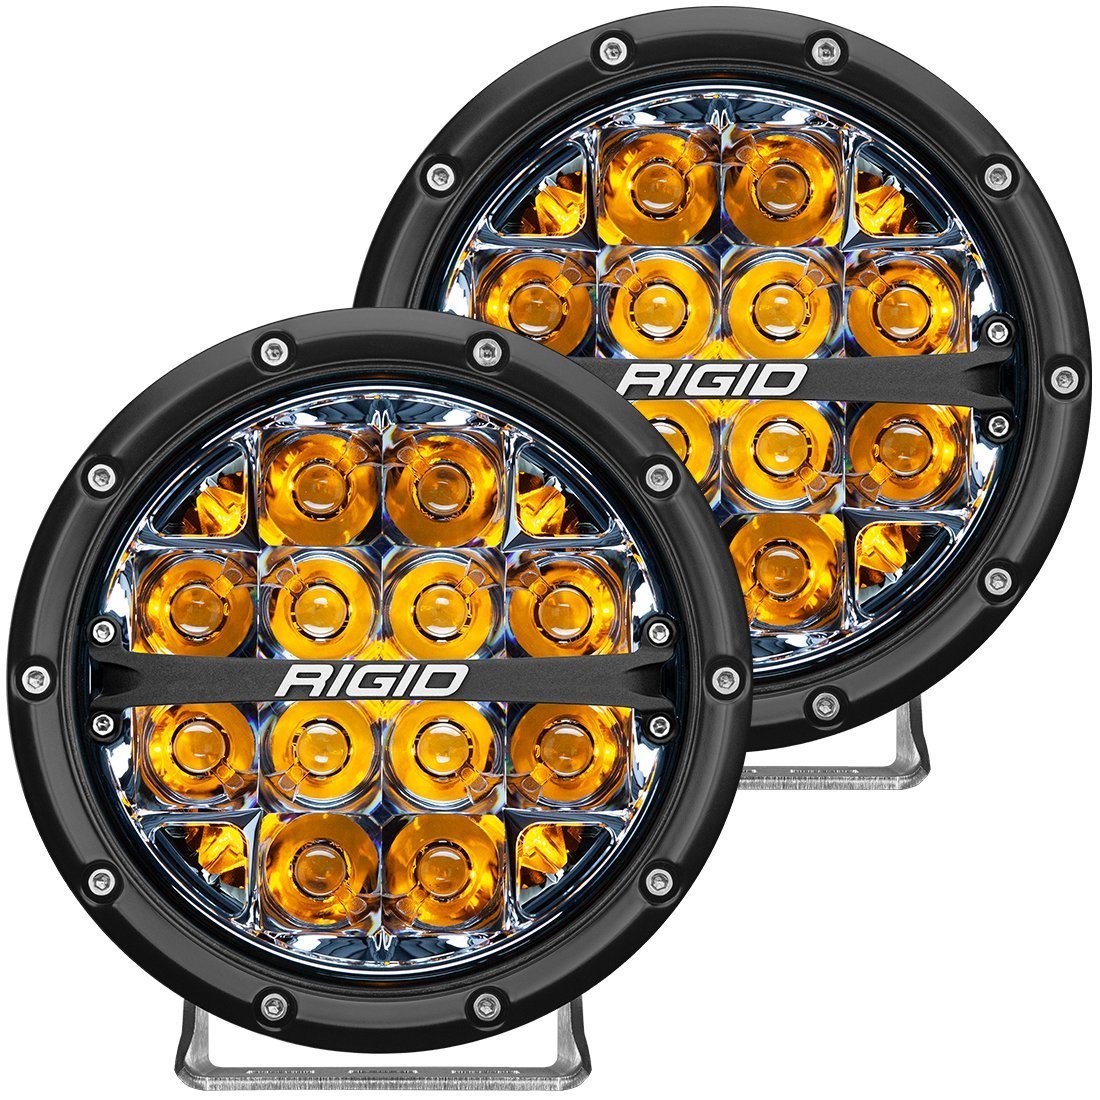 360 Series 6" LED OE Off-Road Fog Light Pair Lighting Rigid Industries Amber Spot display